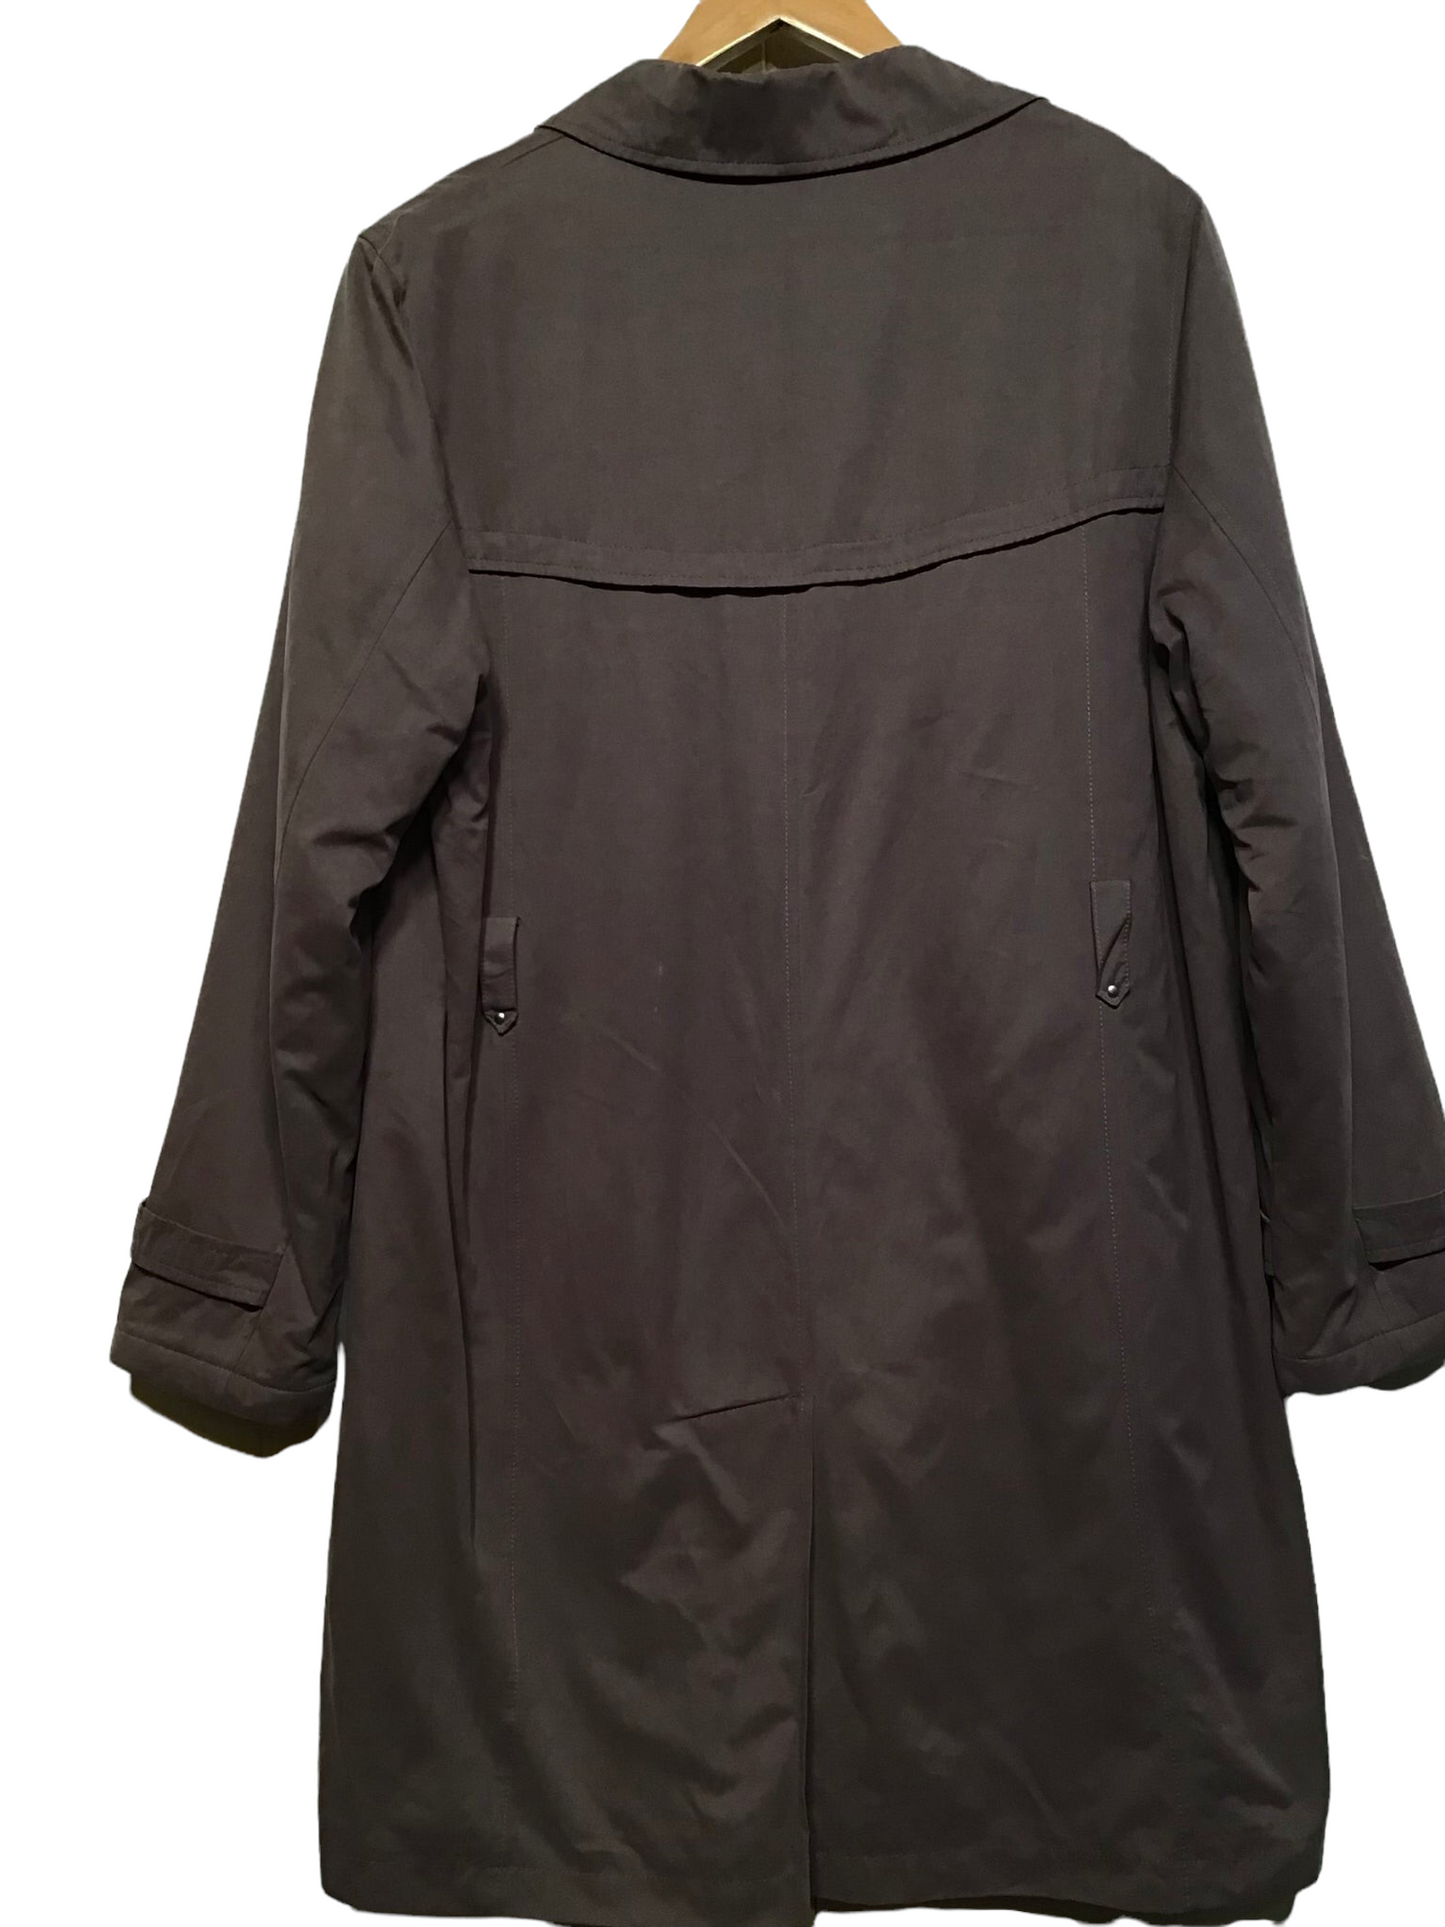 Damo Button Up Formal Coat (Size XL)